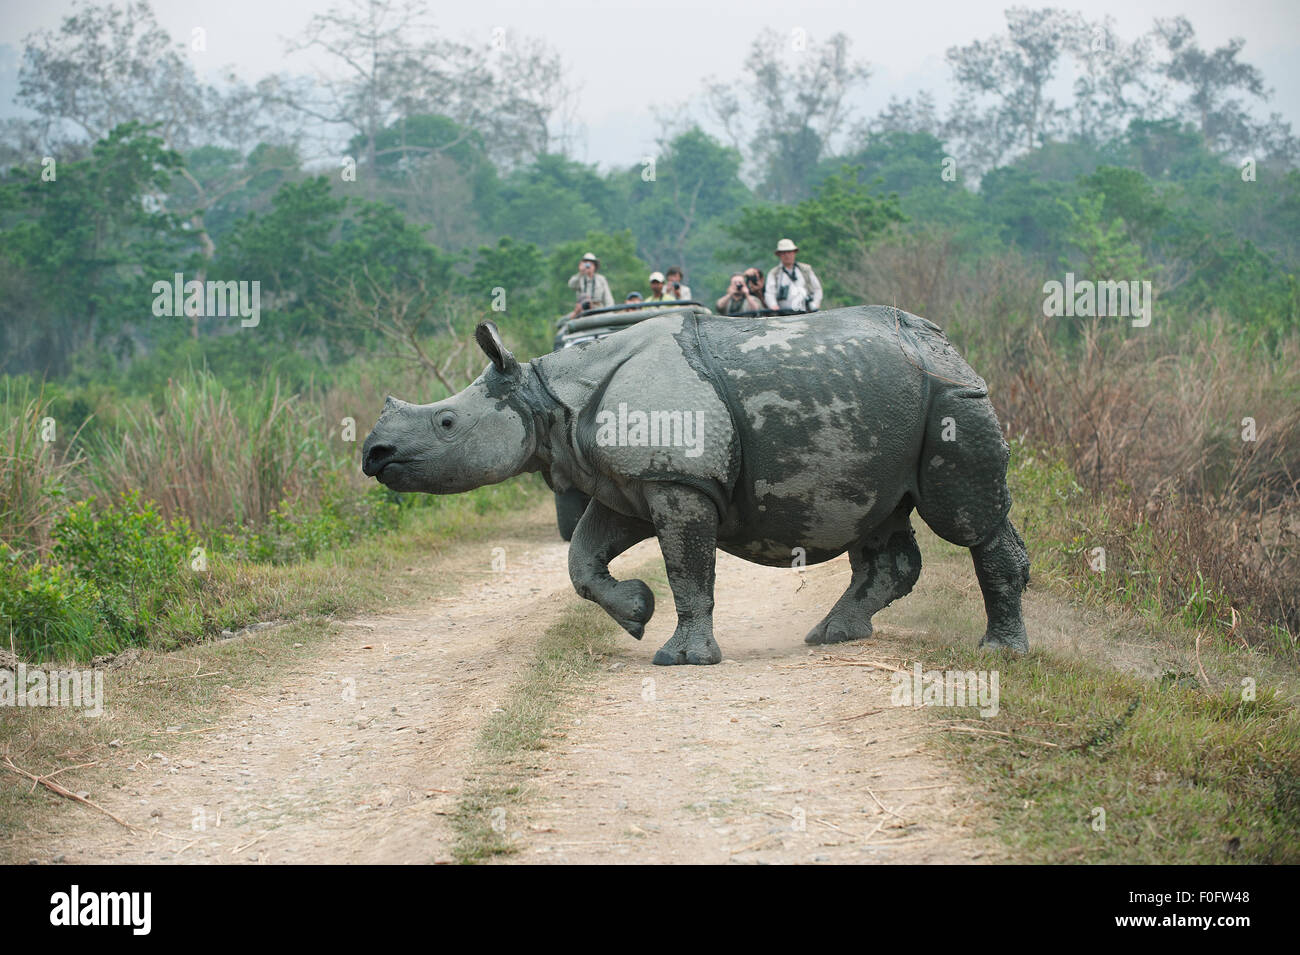 The image was shot in Kaziranga National park in India Stock Photo